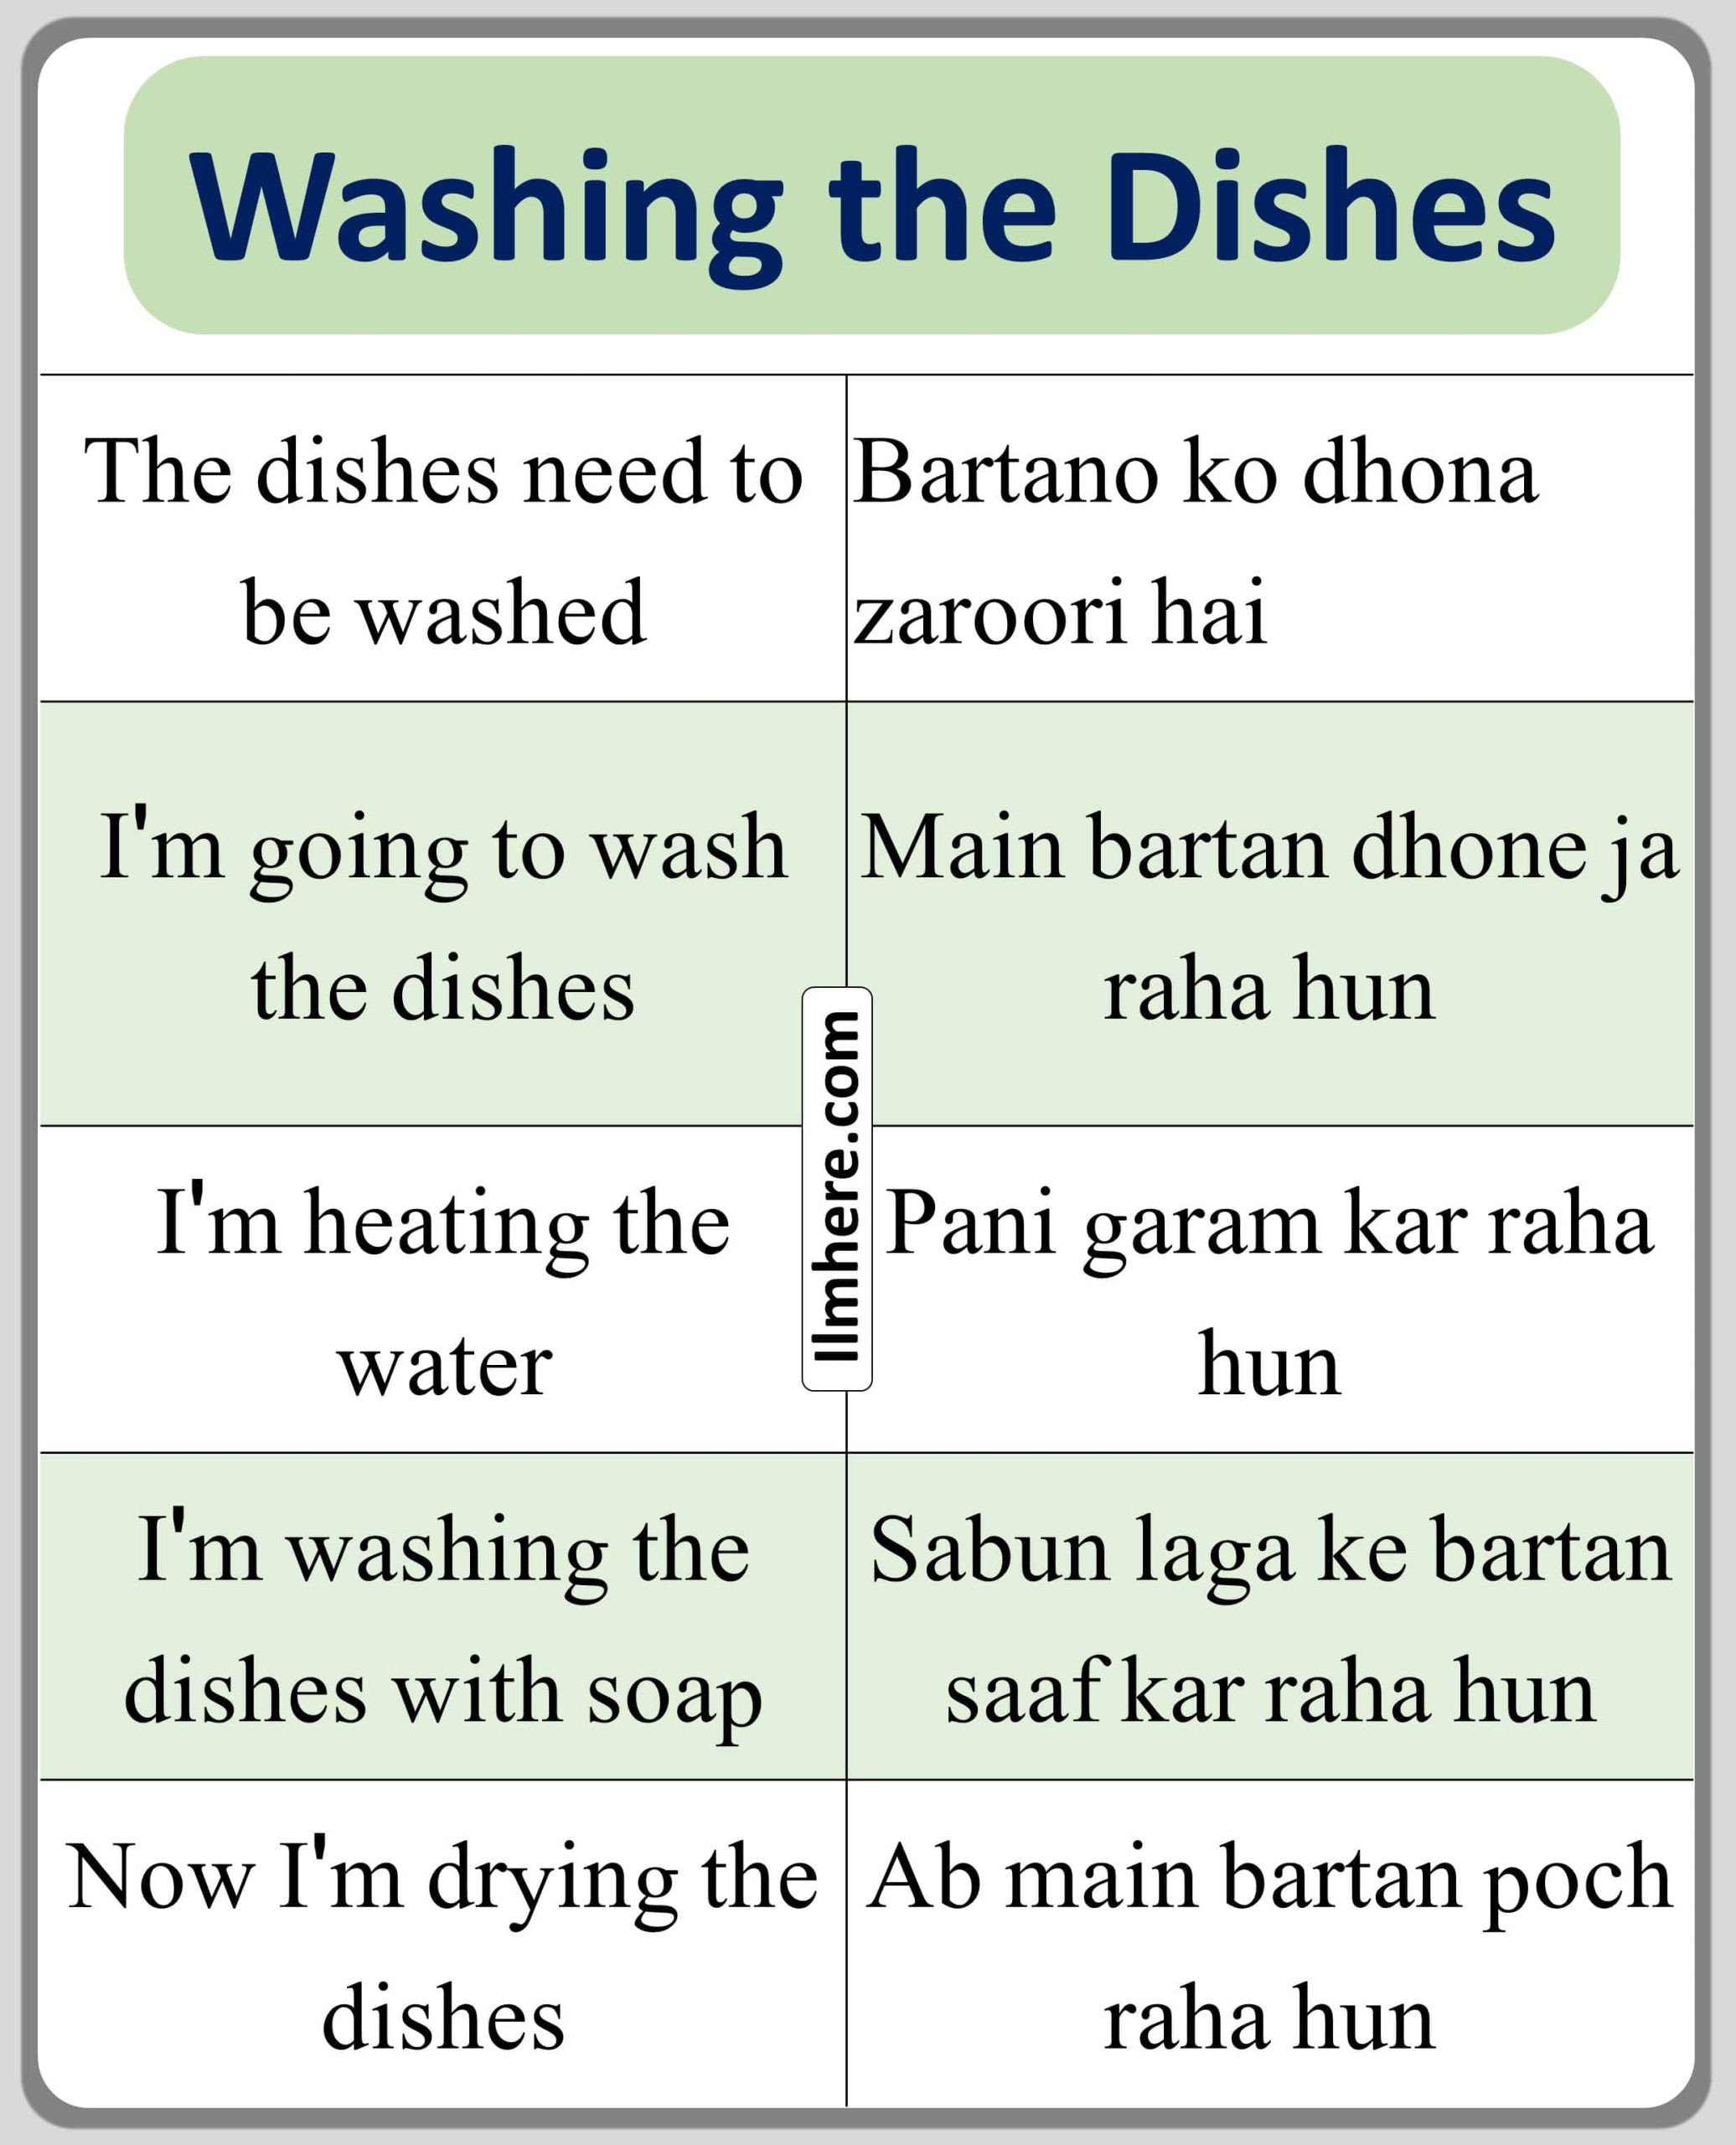 Washing the Dishes Urdu to English Sentences for Household Chore